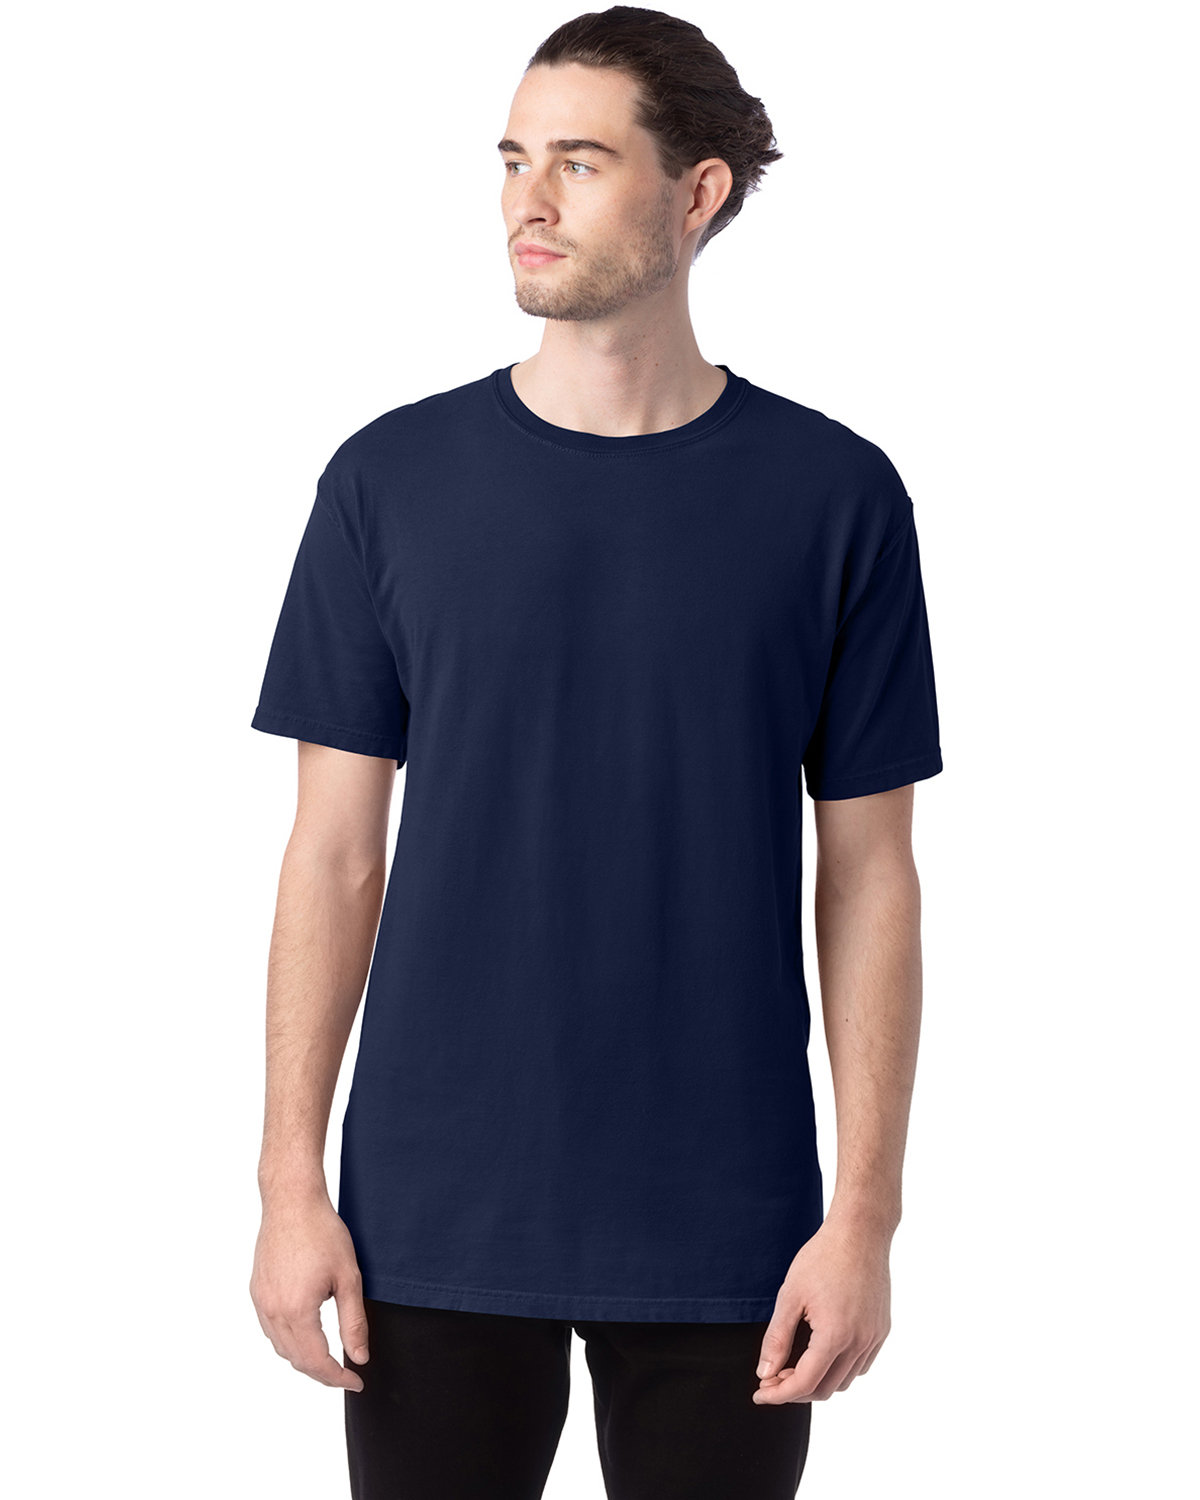 ComfortWash by Hanes Men's Garment-Dyed T-Shirt NAVY 